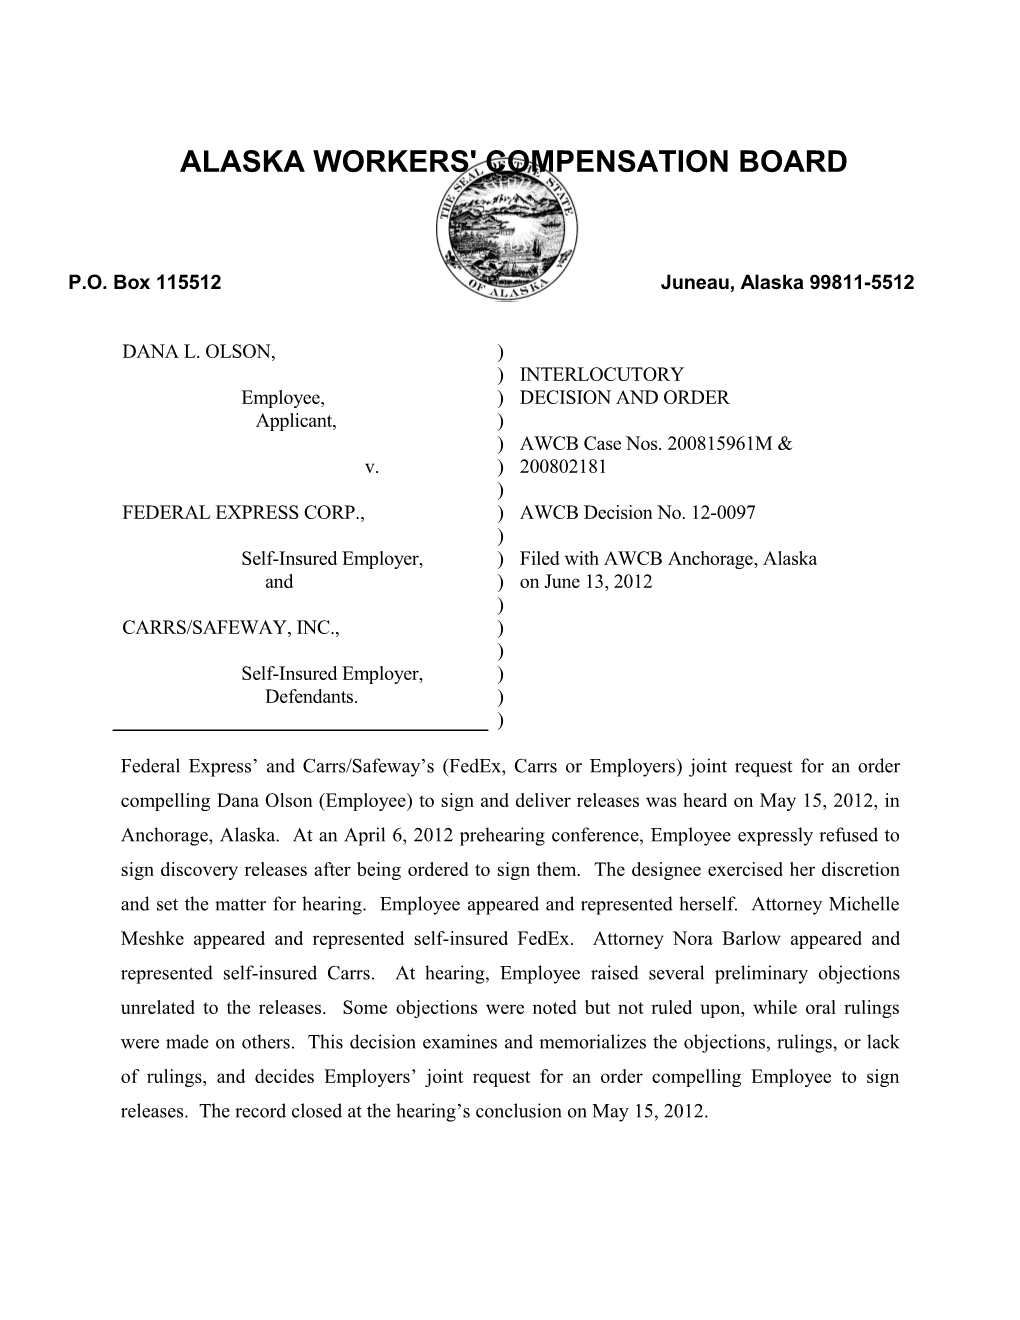 Alaska Workers' Compensation Board s28